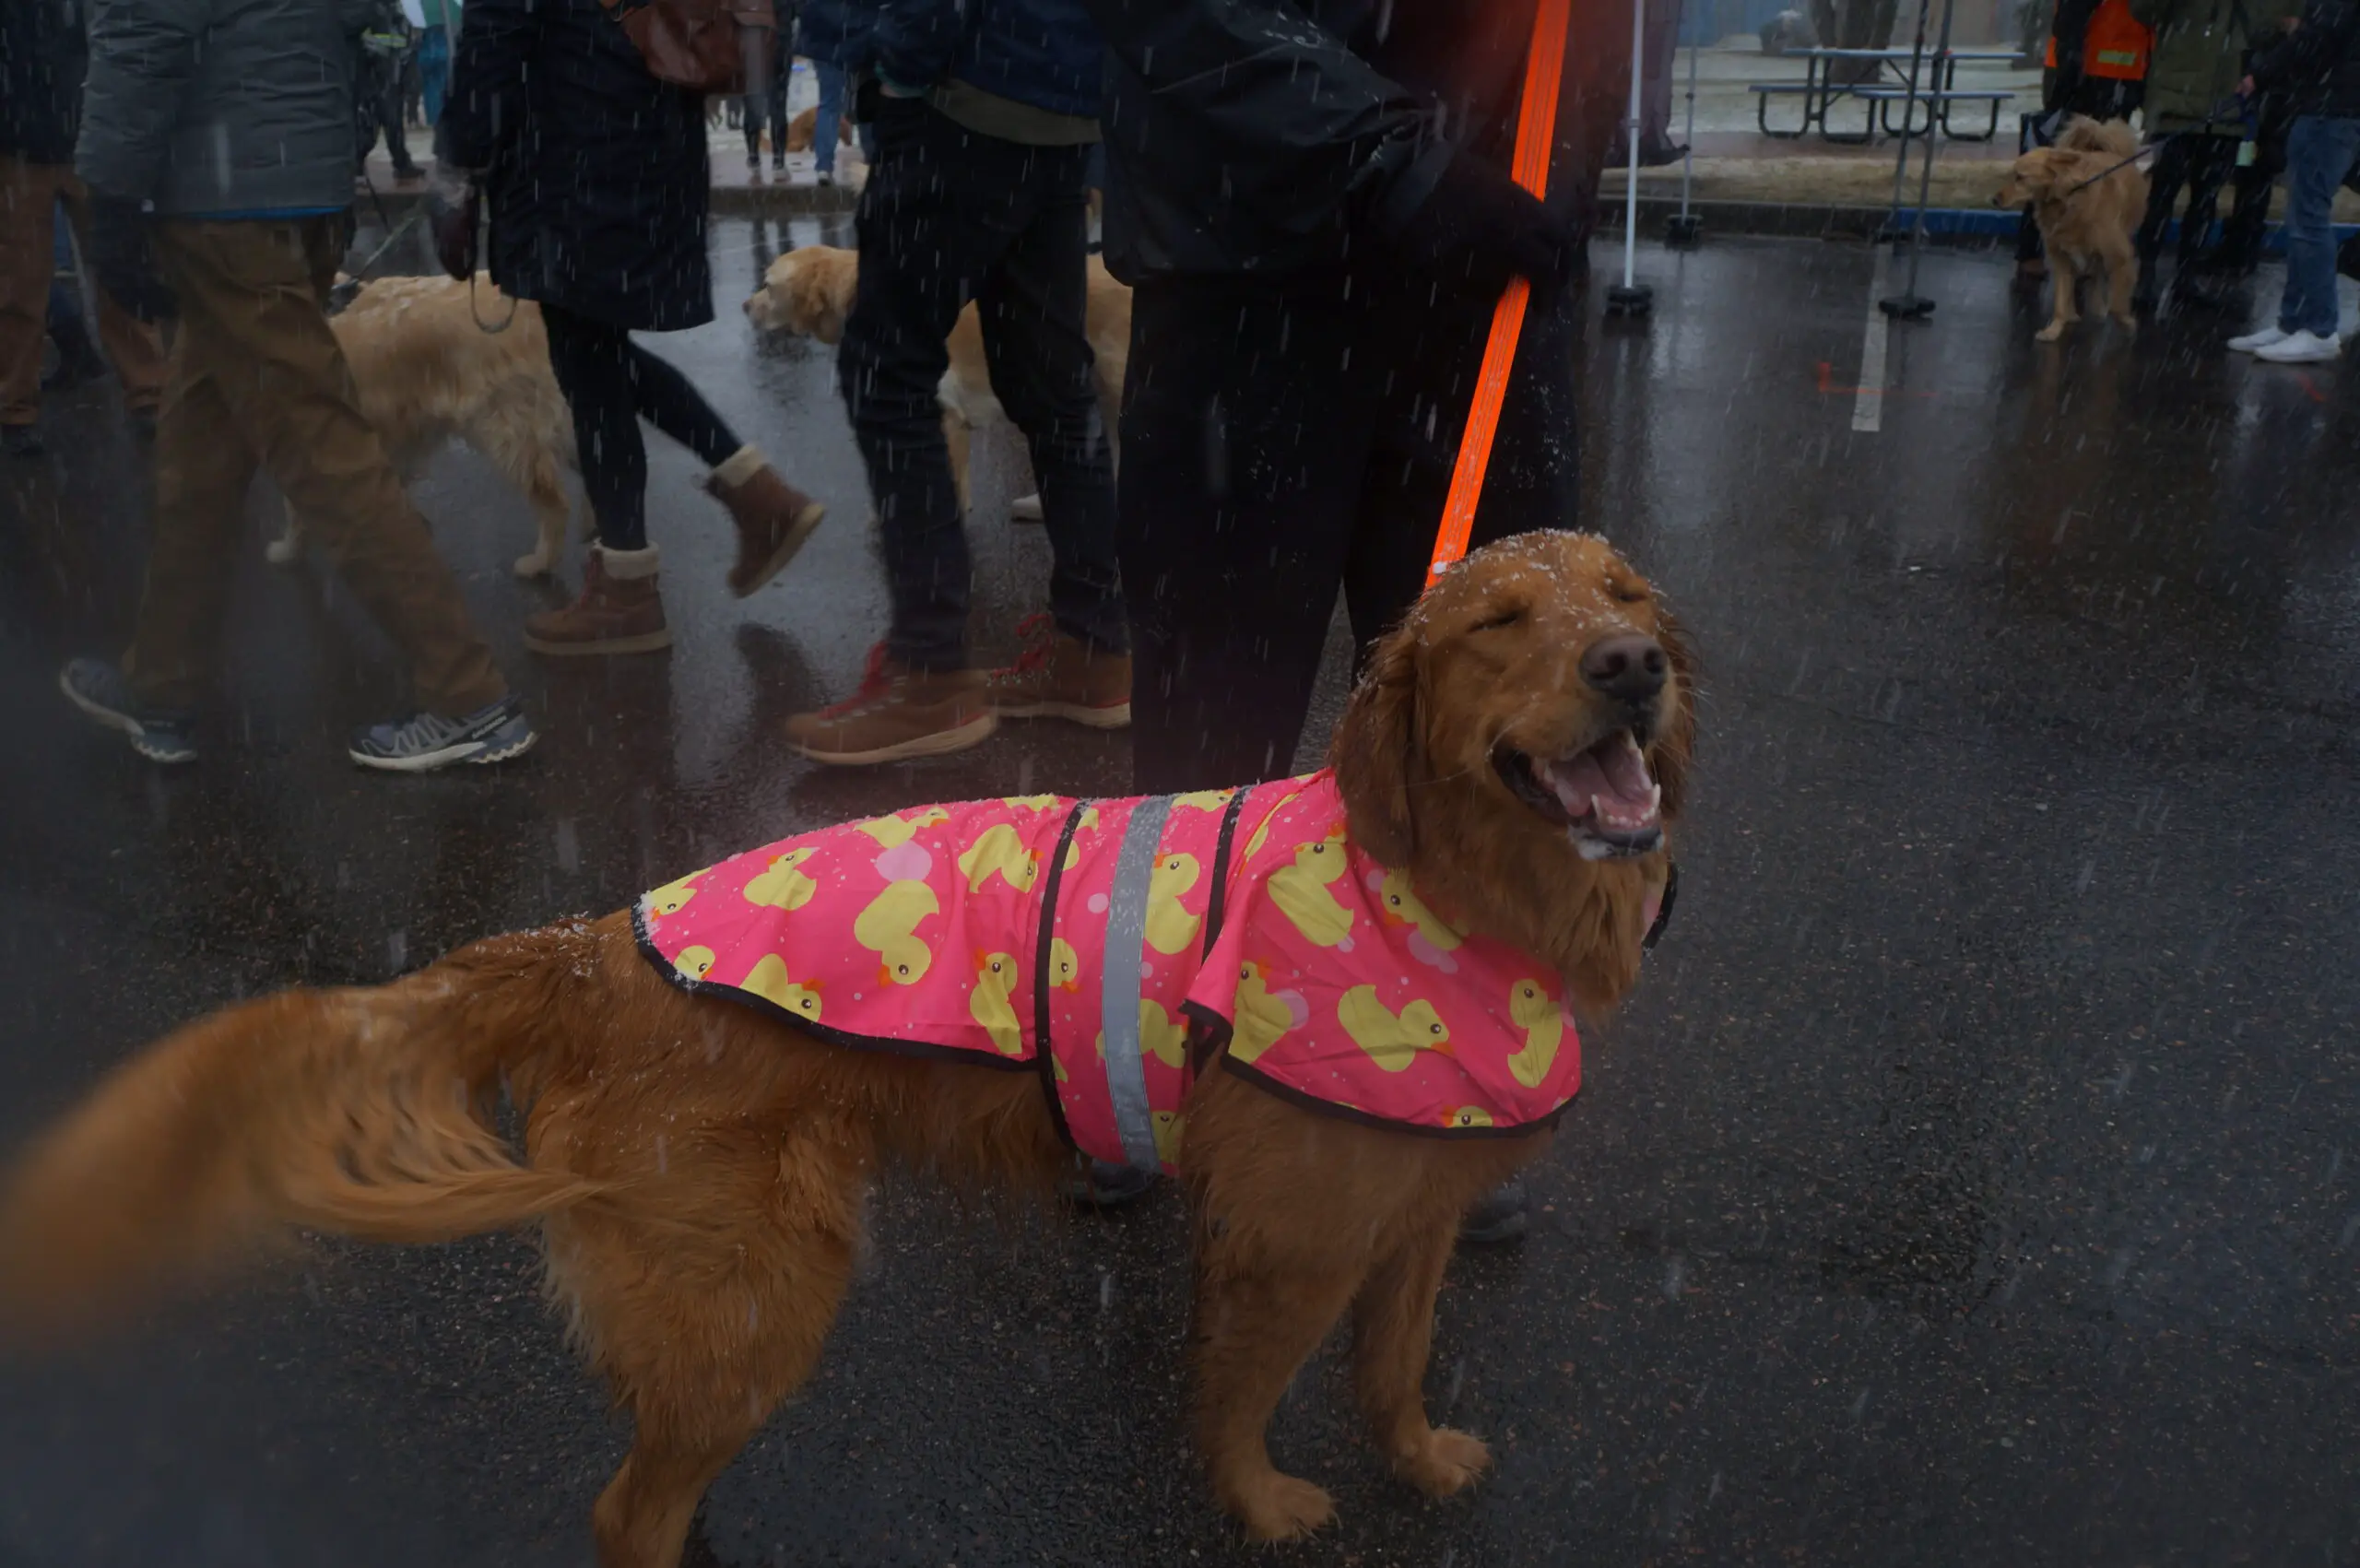 Goldens in Golden photo - cute dog in a rubber-duck rain coat